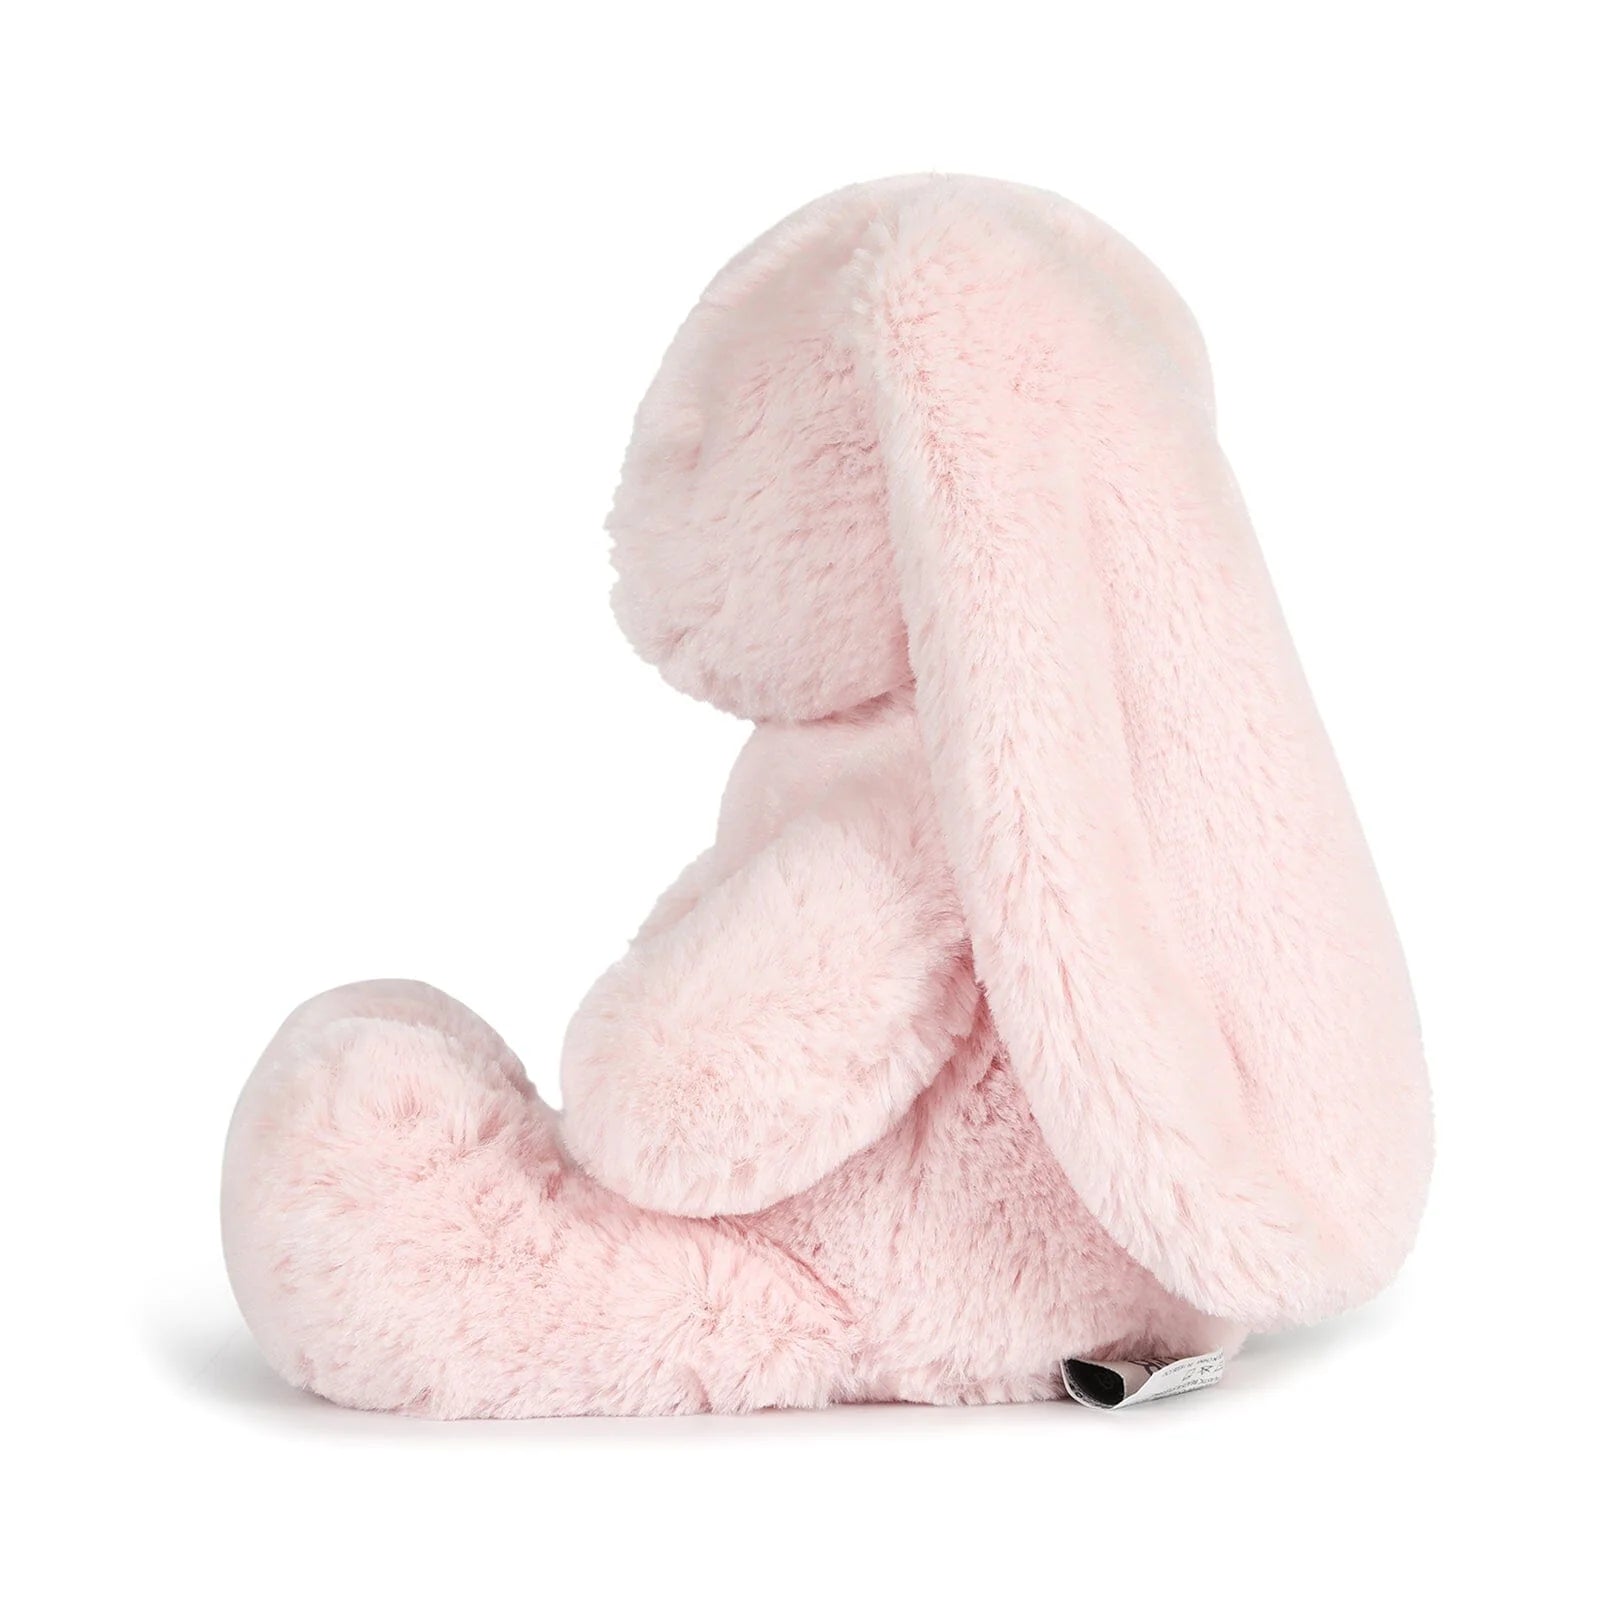 O.B Designs Betsy Bunny Soft Toy